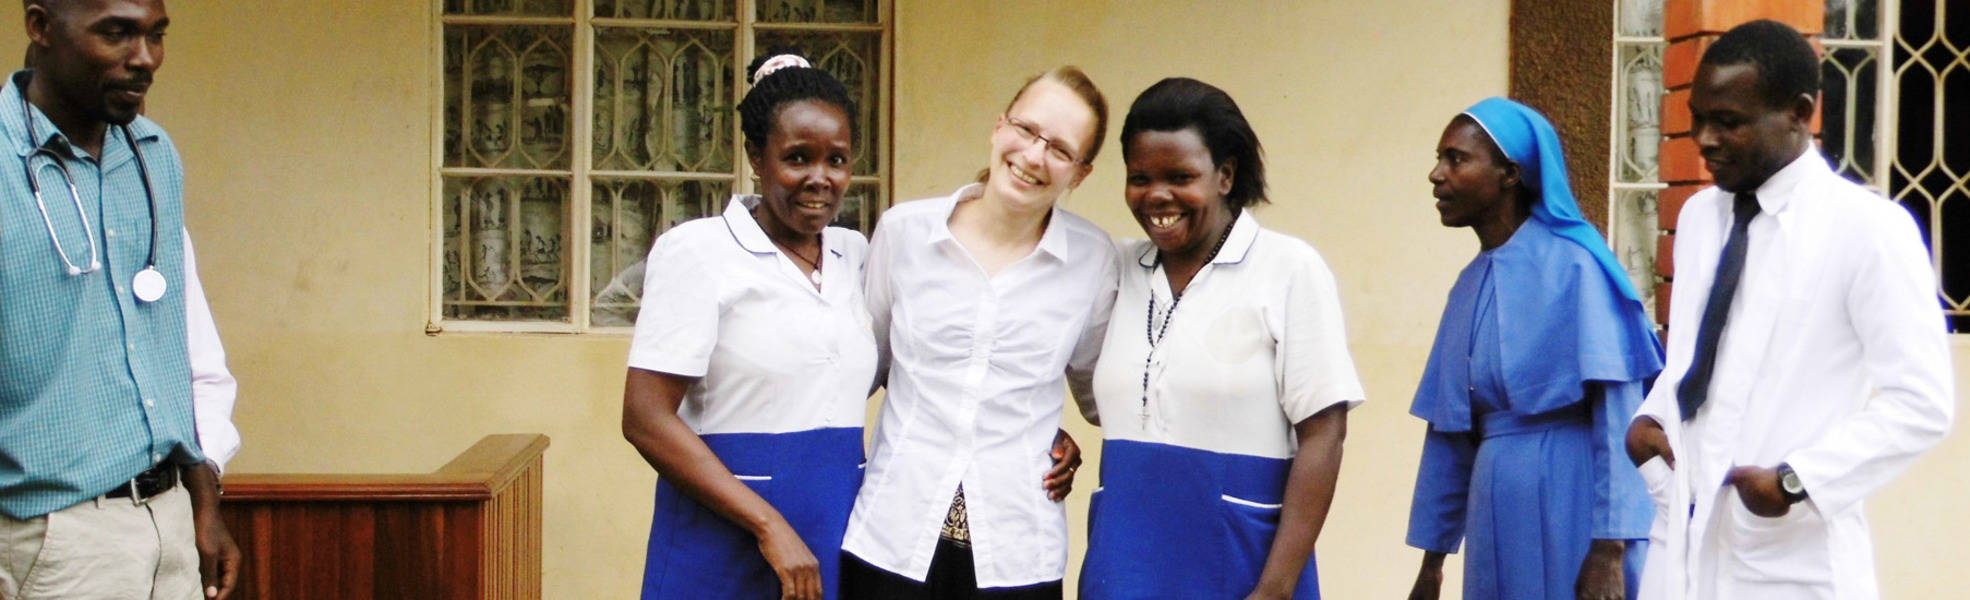 Volunteering in Uganda - Medicine Volunteer